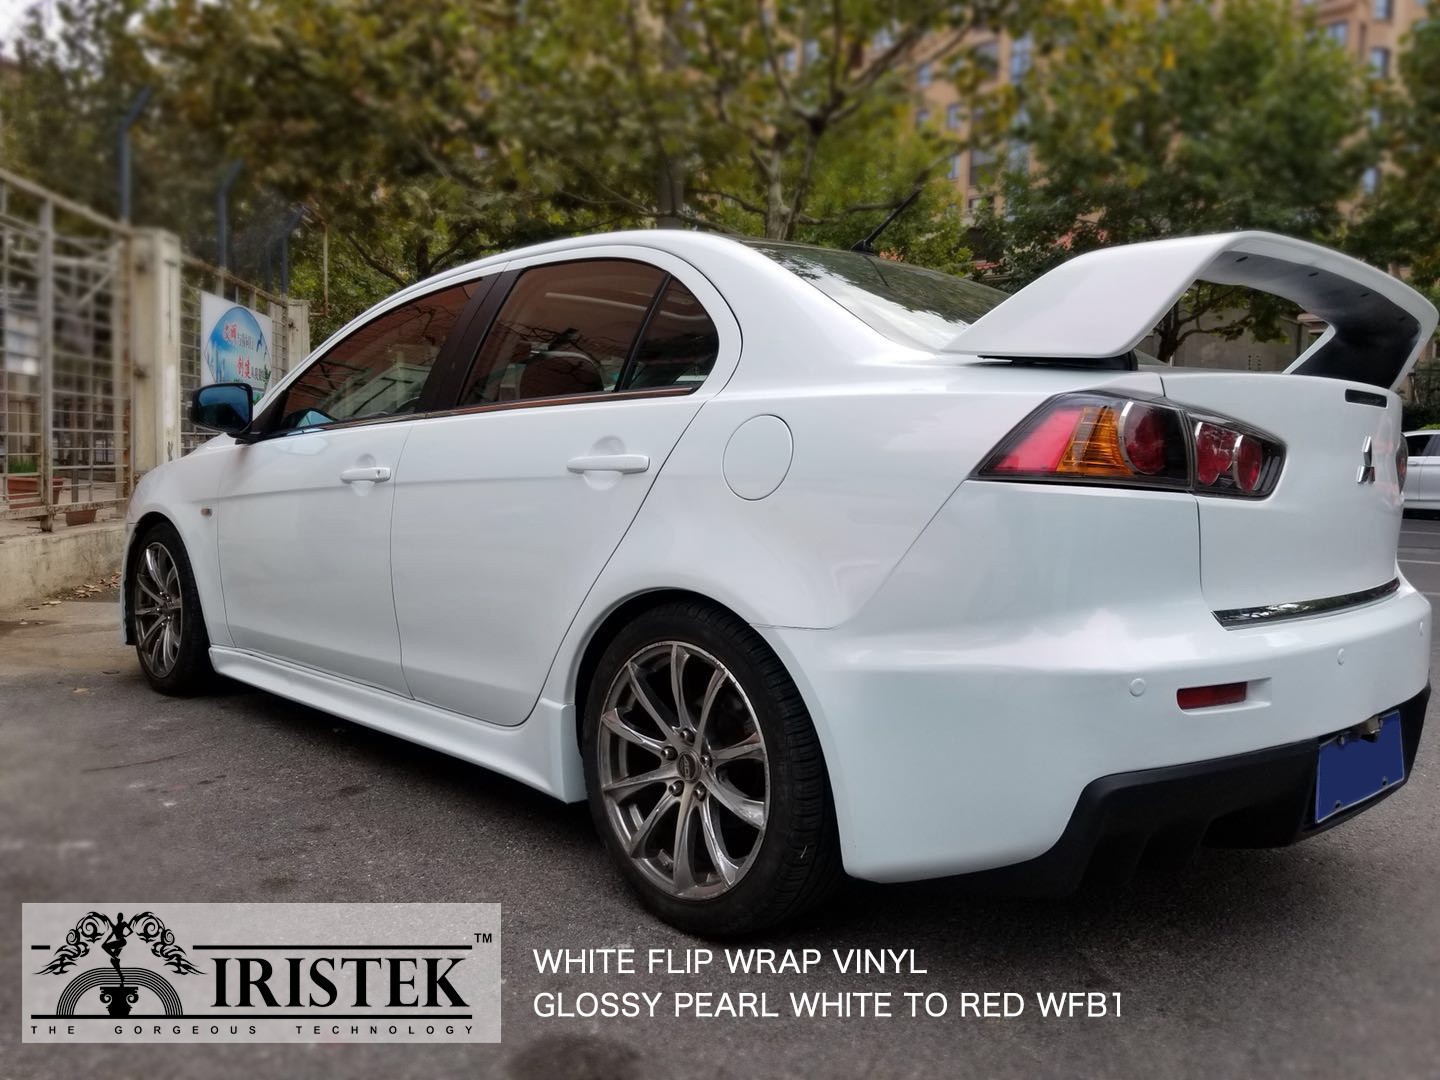 IRISTEK-Best Iristek Satin Pearl White Vinyl Dawn White 3m Vinyl Vehicle Wrap-8